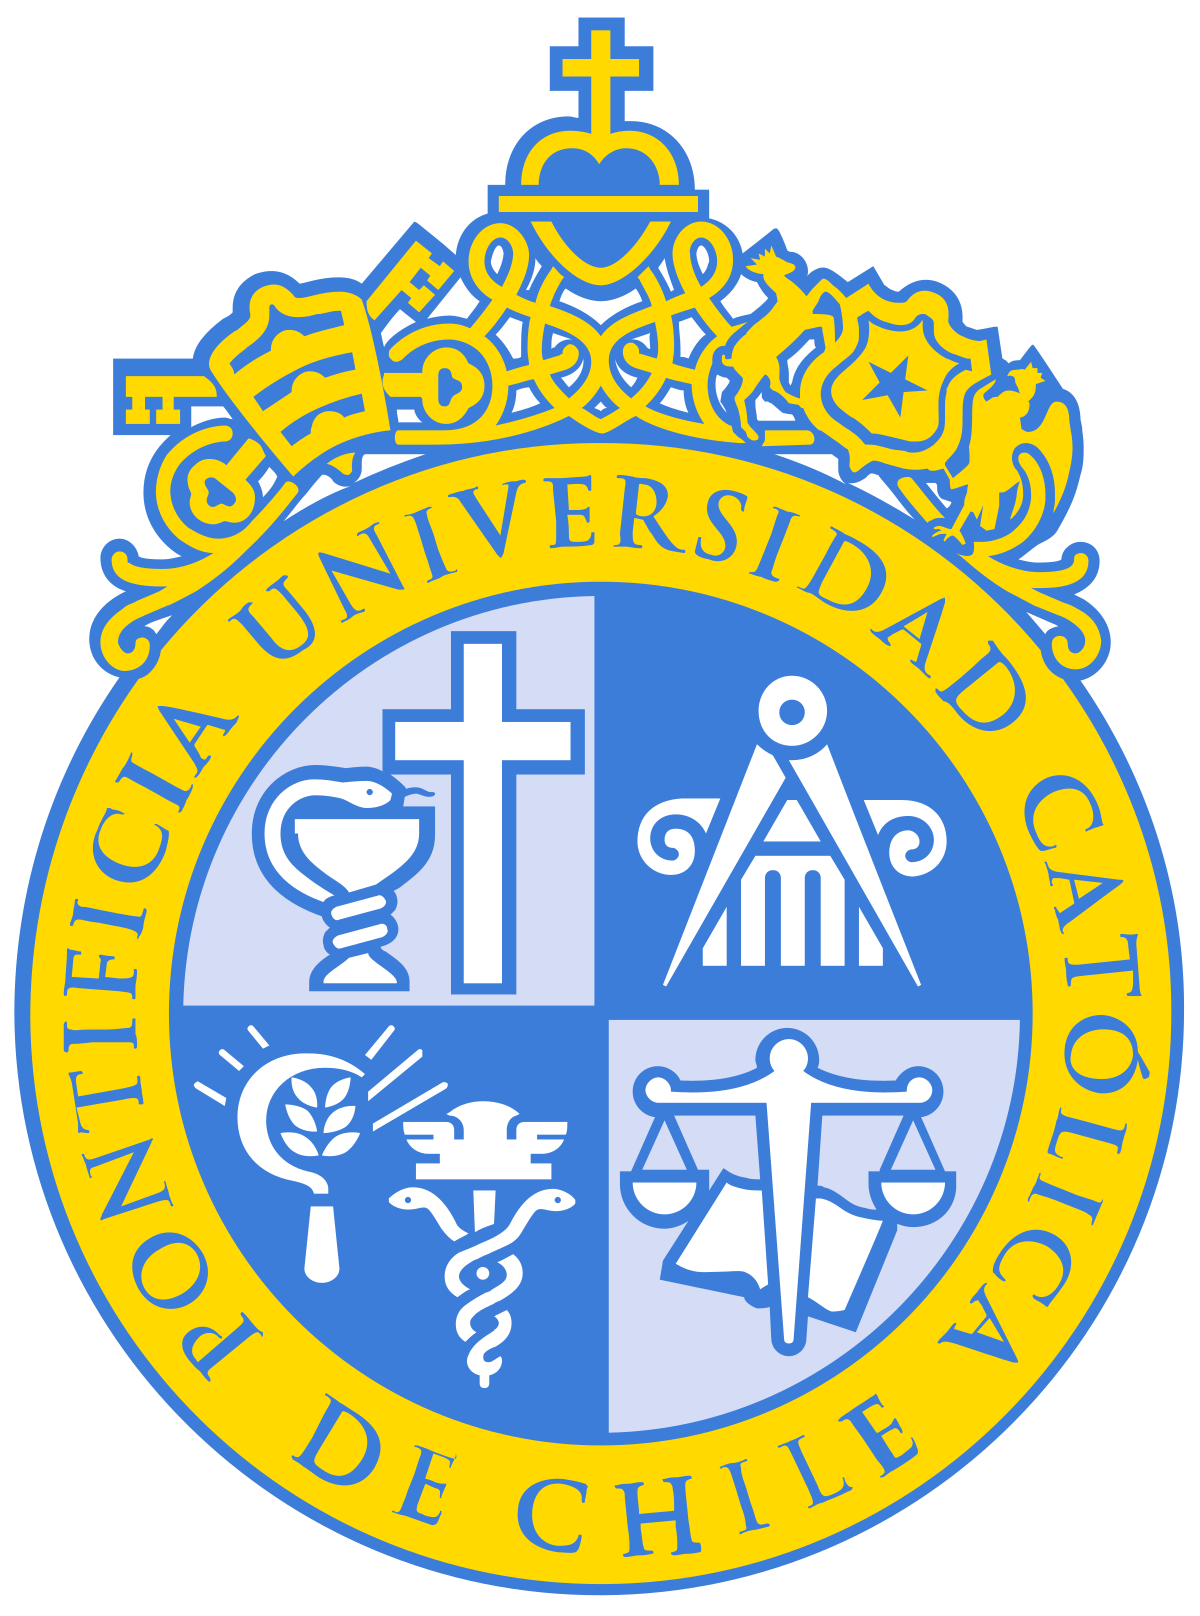 Pontificia Universidad Católica de Chile - UC